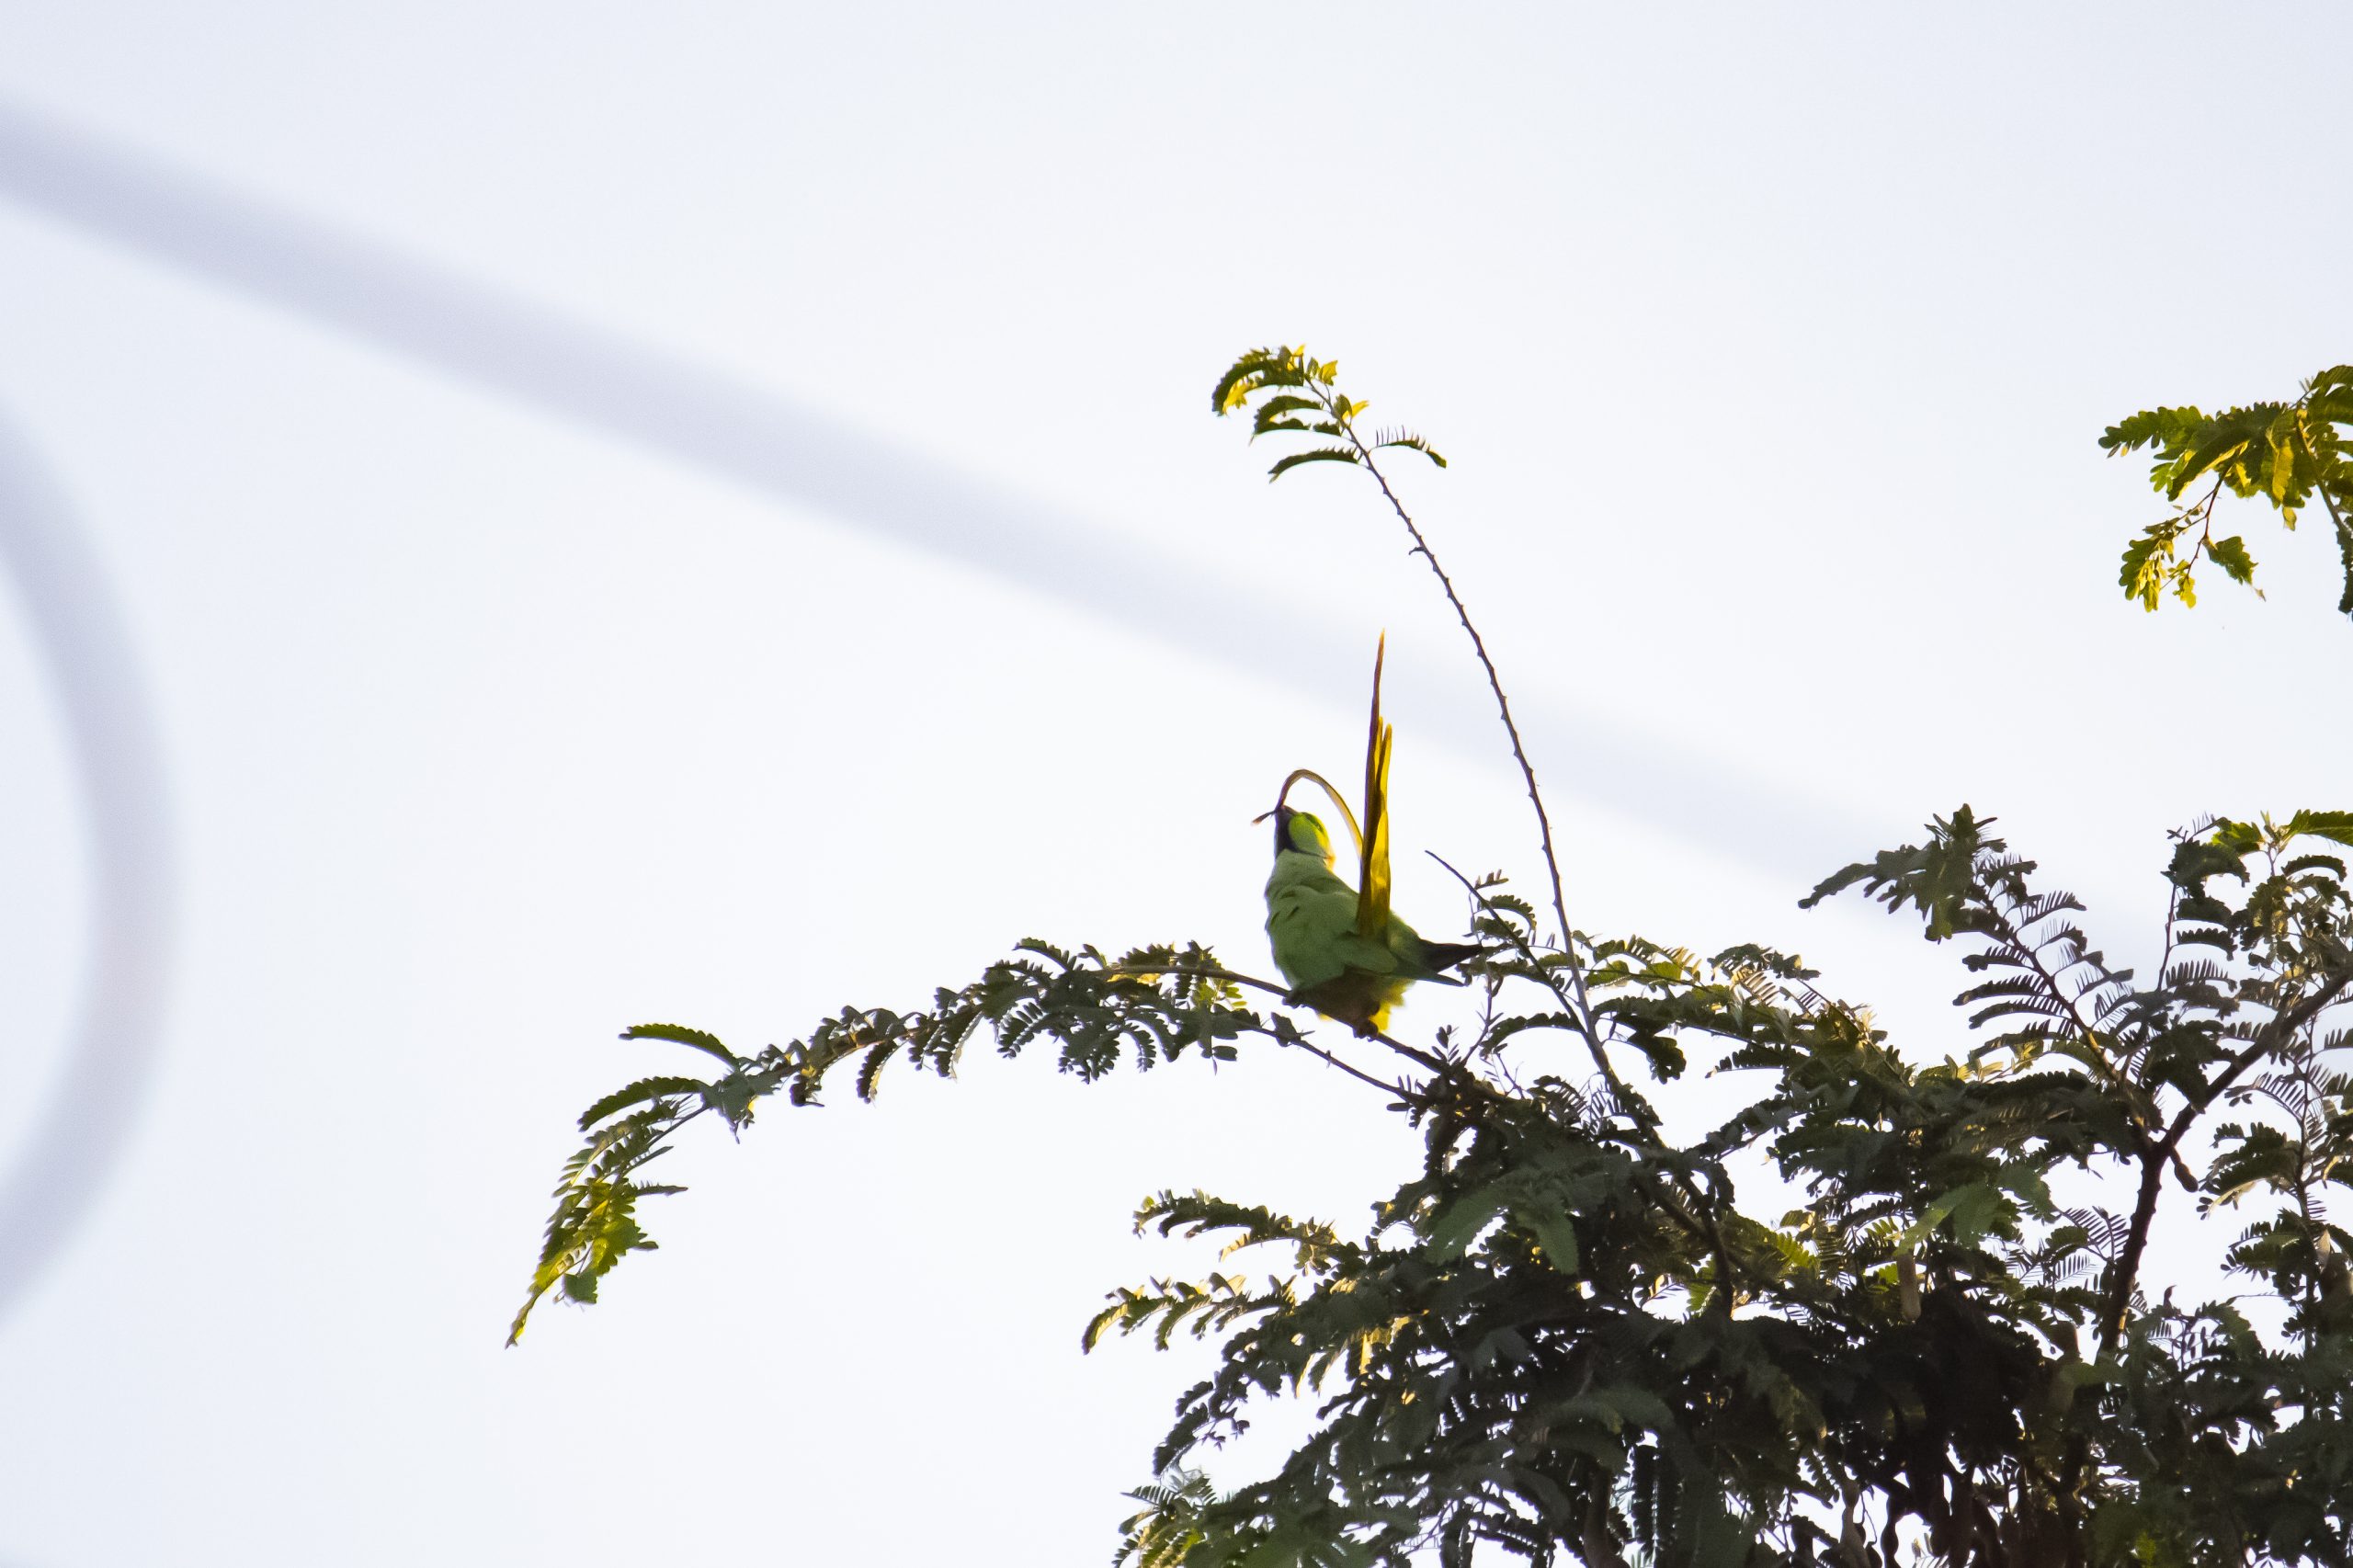 Parrot sitting on tree